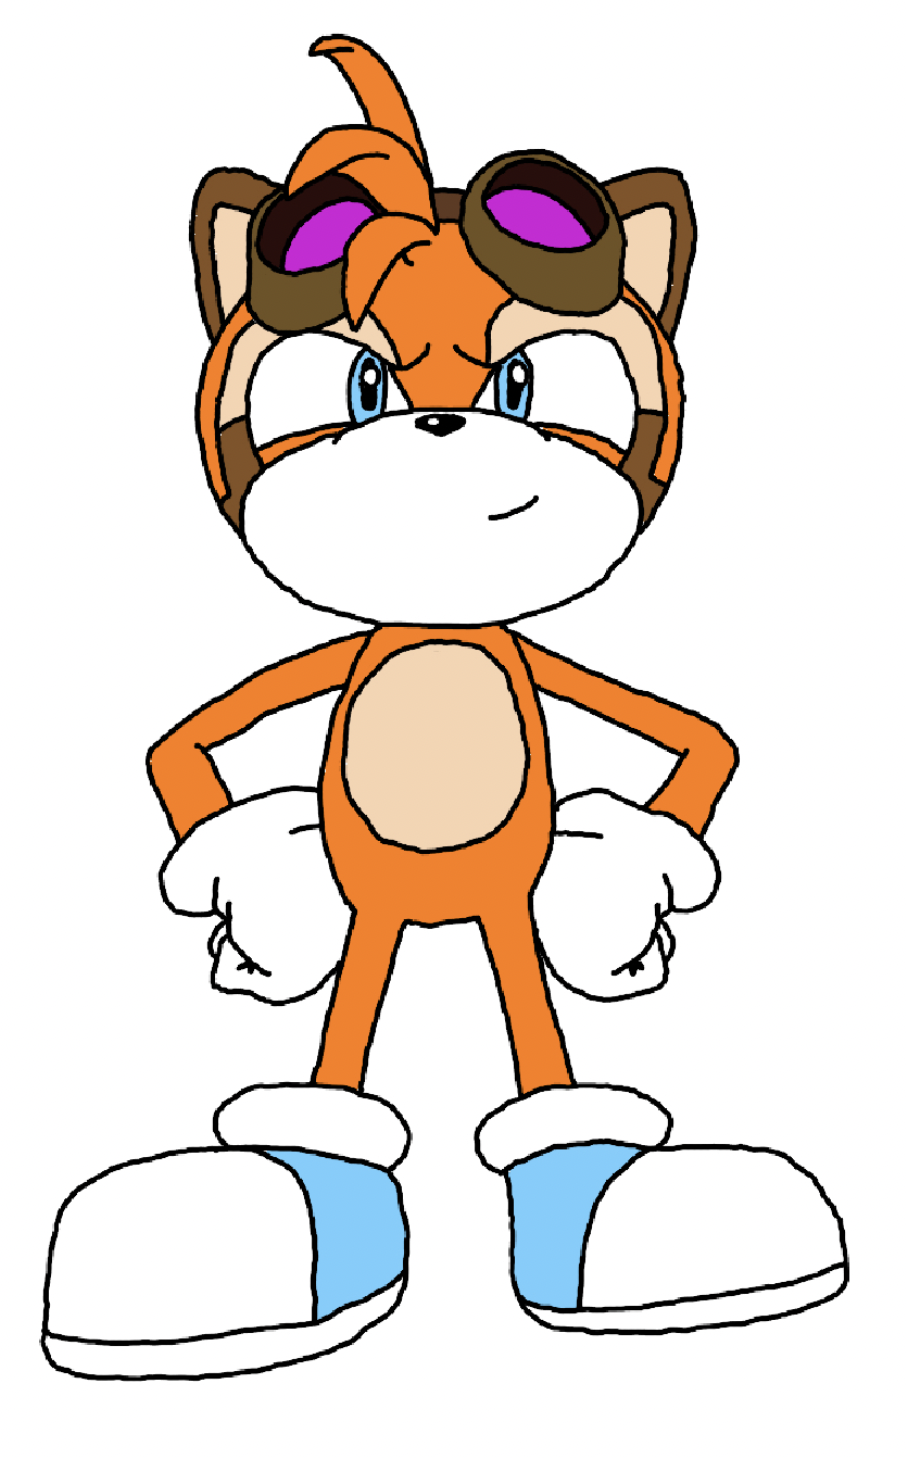 Gadget the Raccoon, Sonic Fanon Wiki